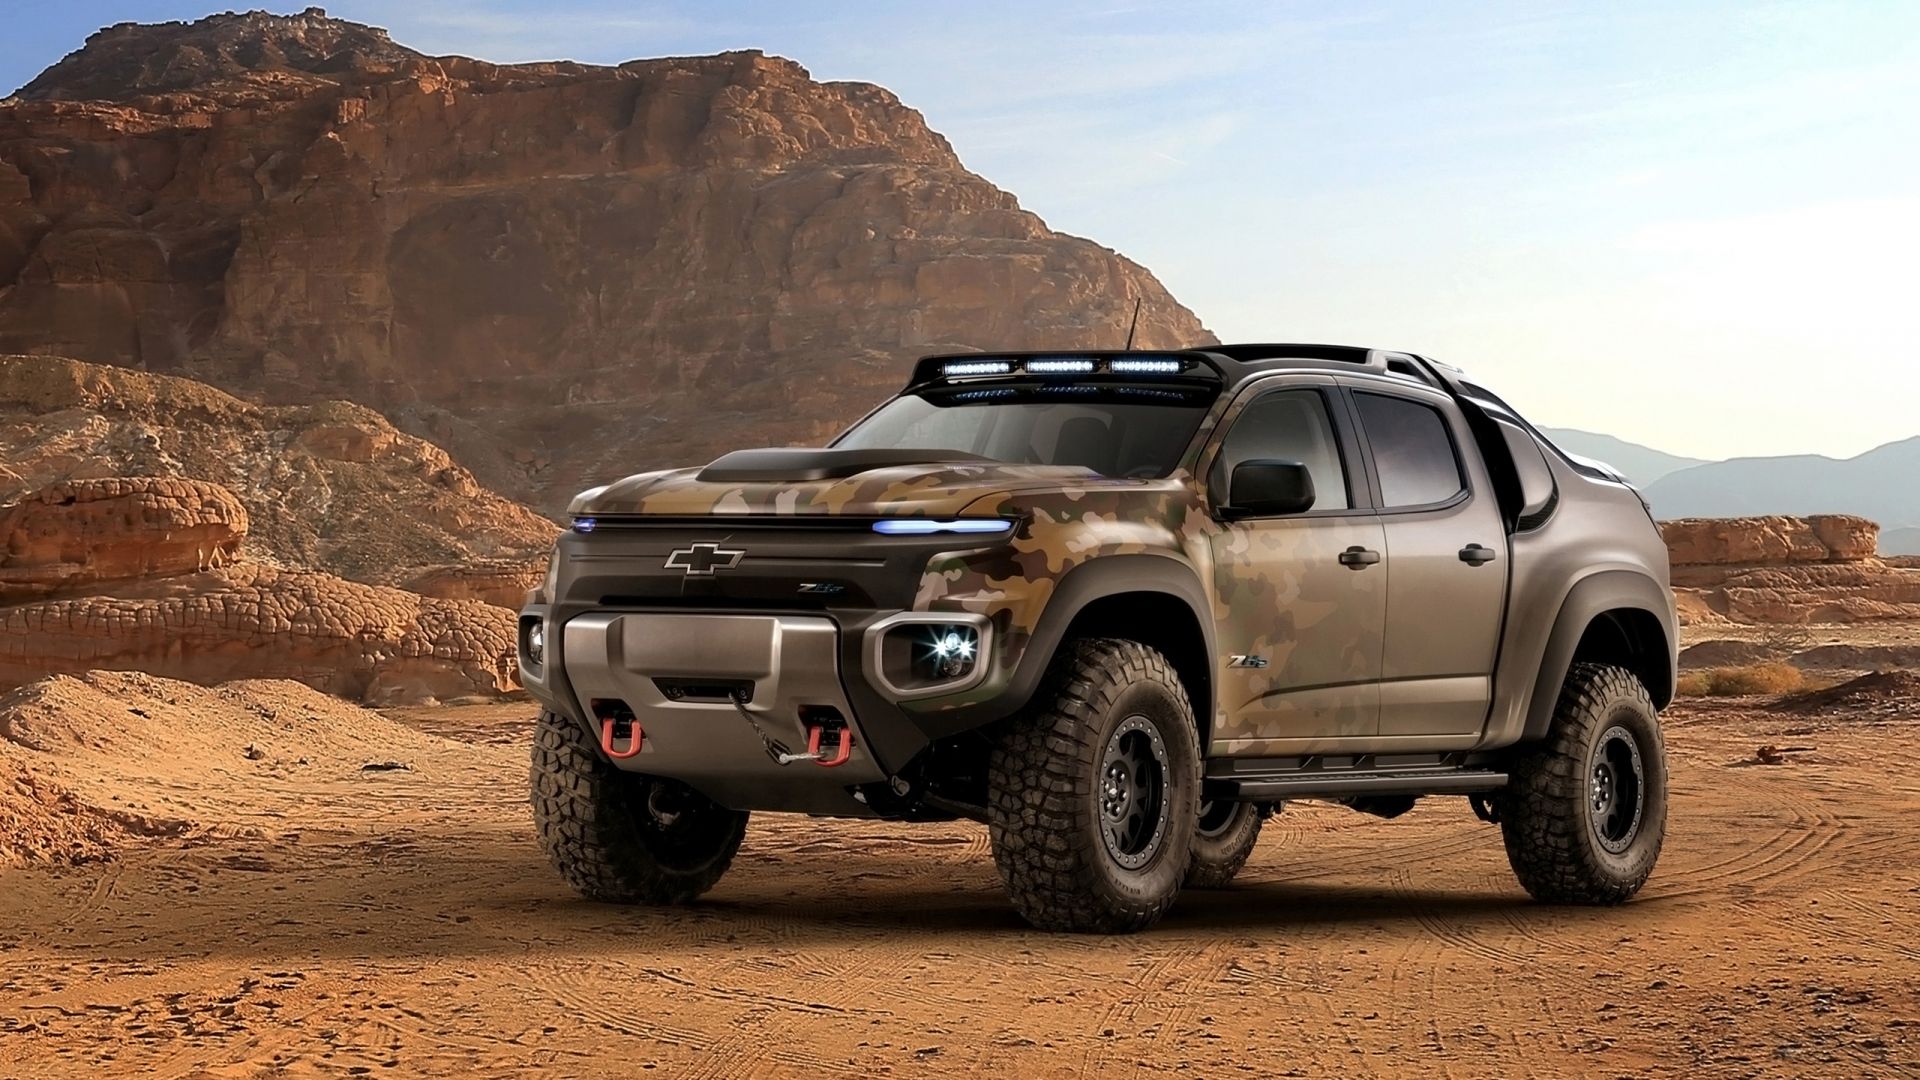 Wallpaper Chevrolet Colorado, truck, desert